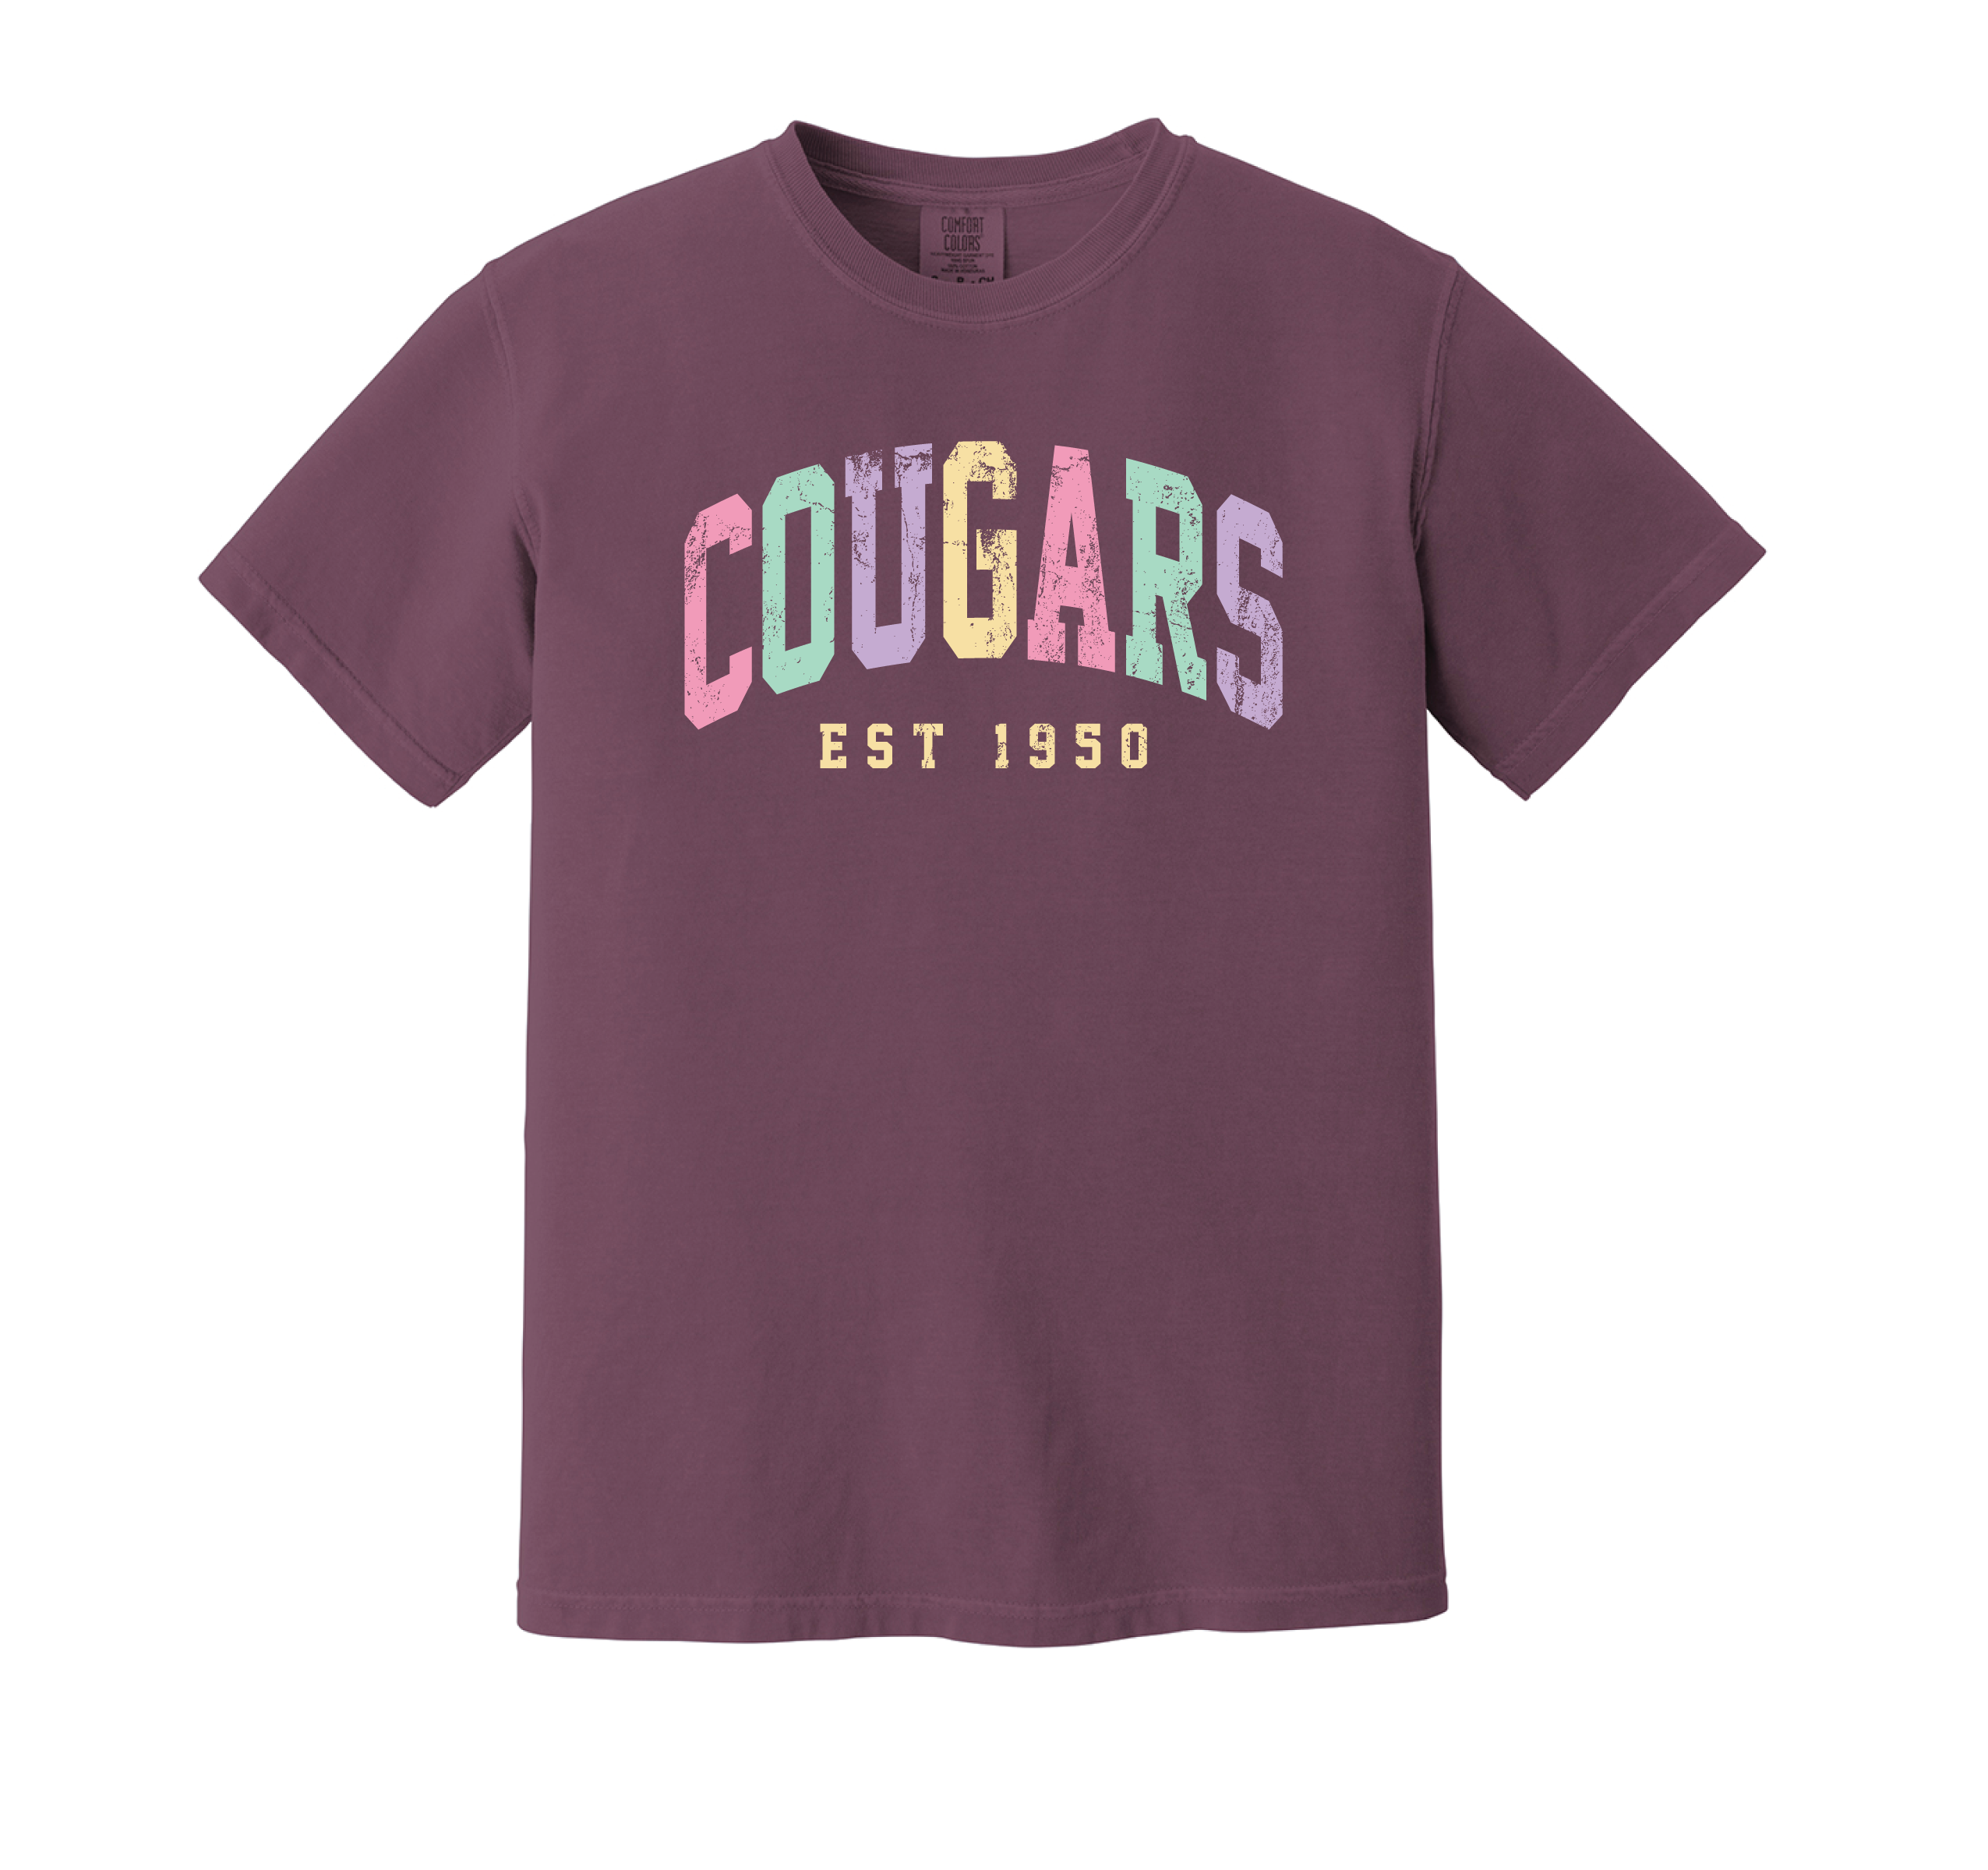 Cougars Colorful Collegiate Tees